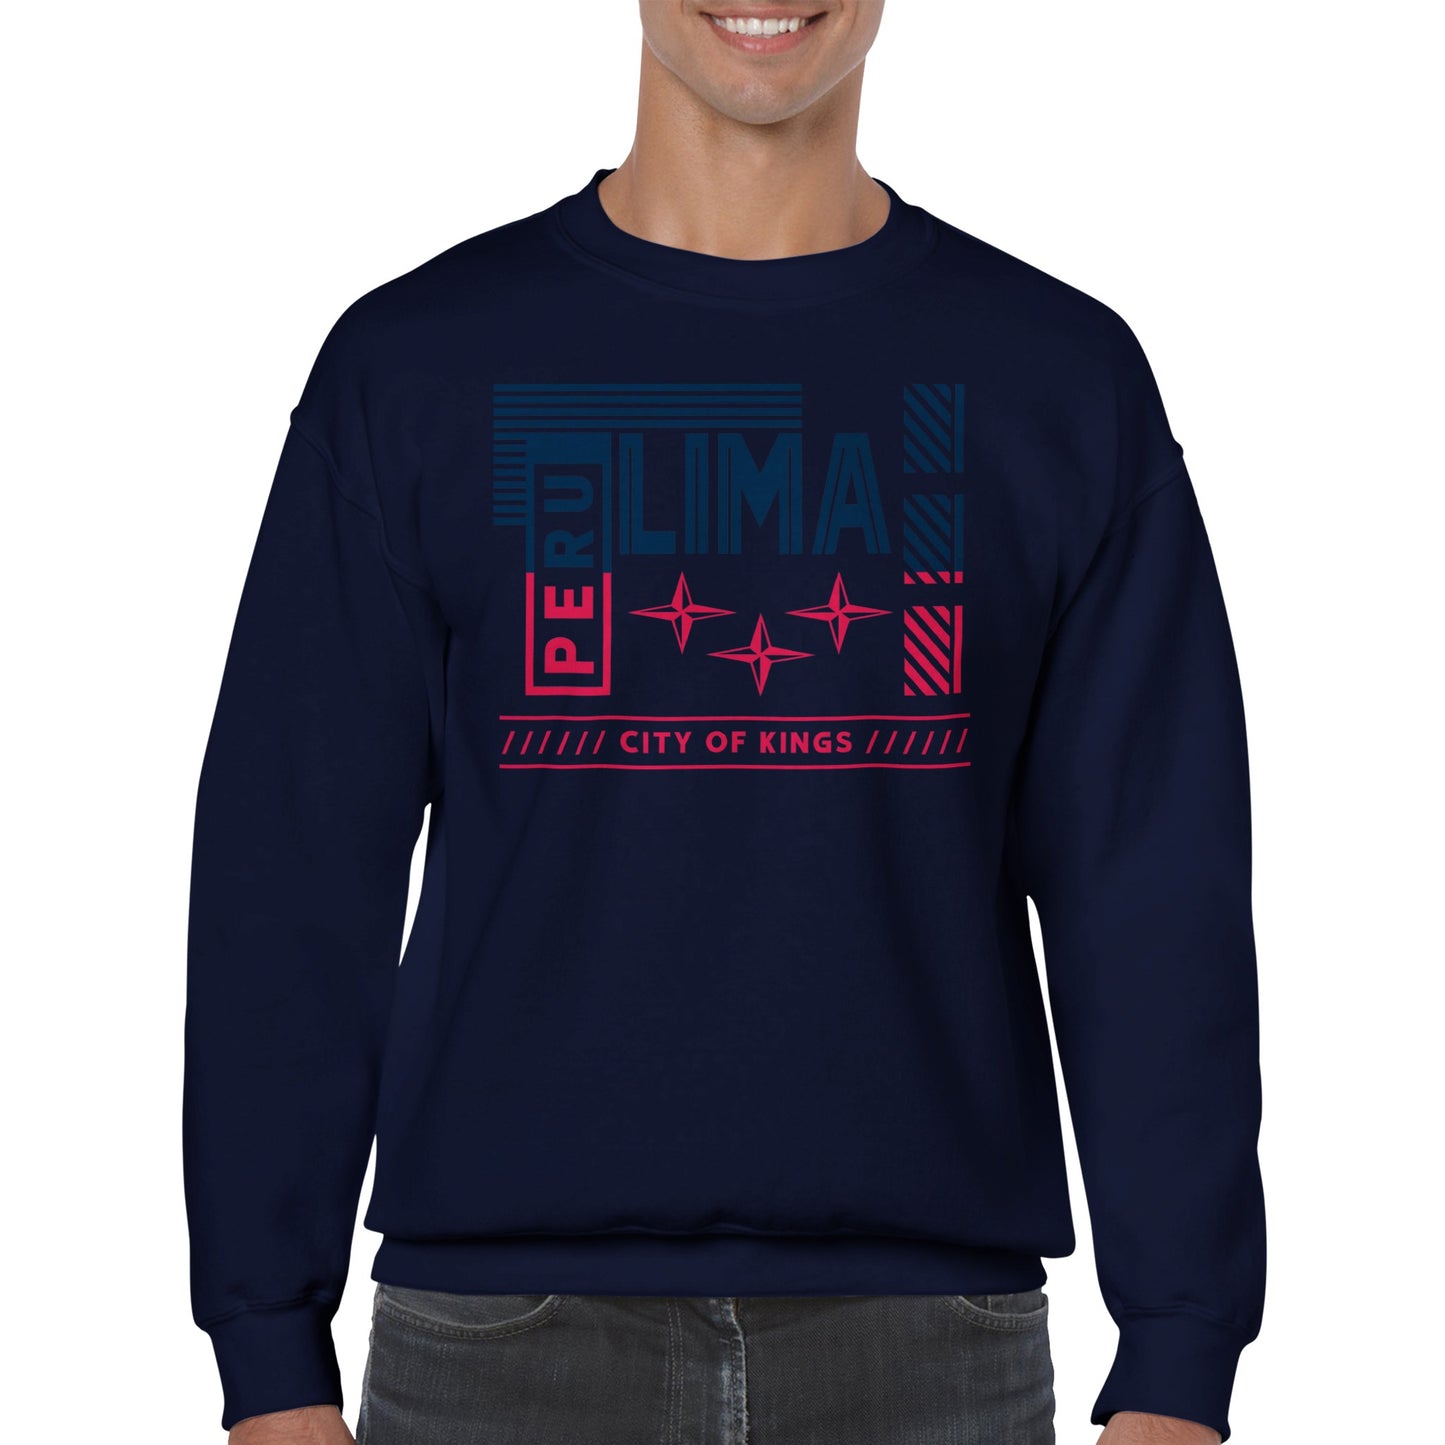 Classic Unisex Crewneck Sweatshirt